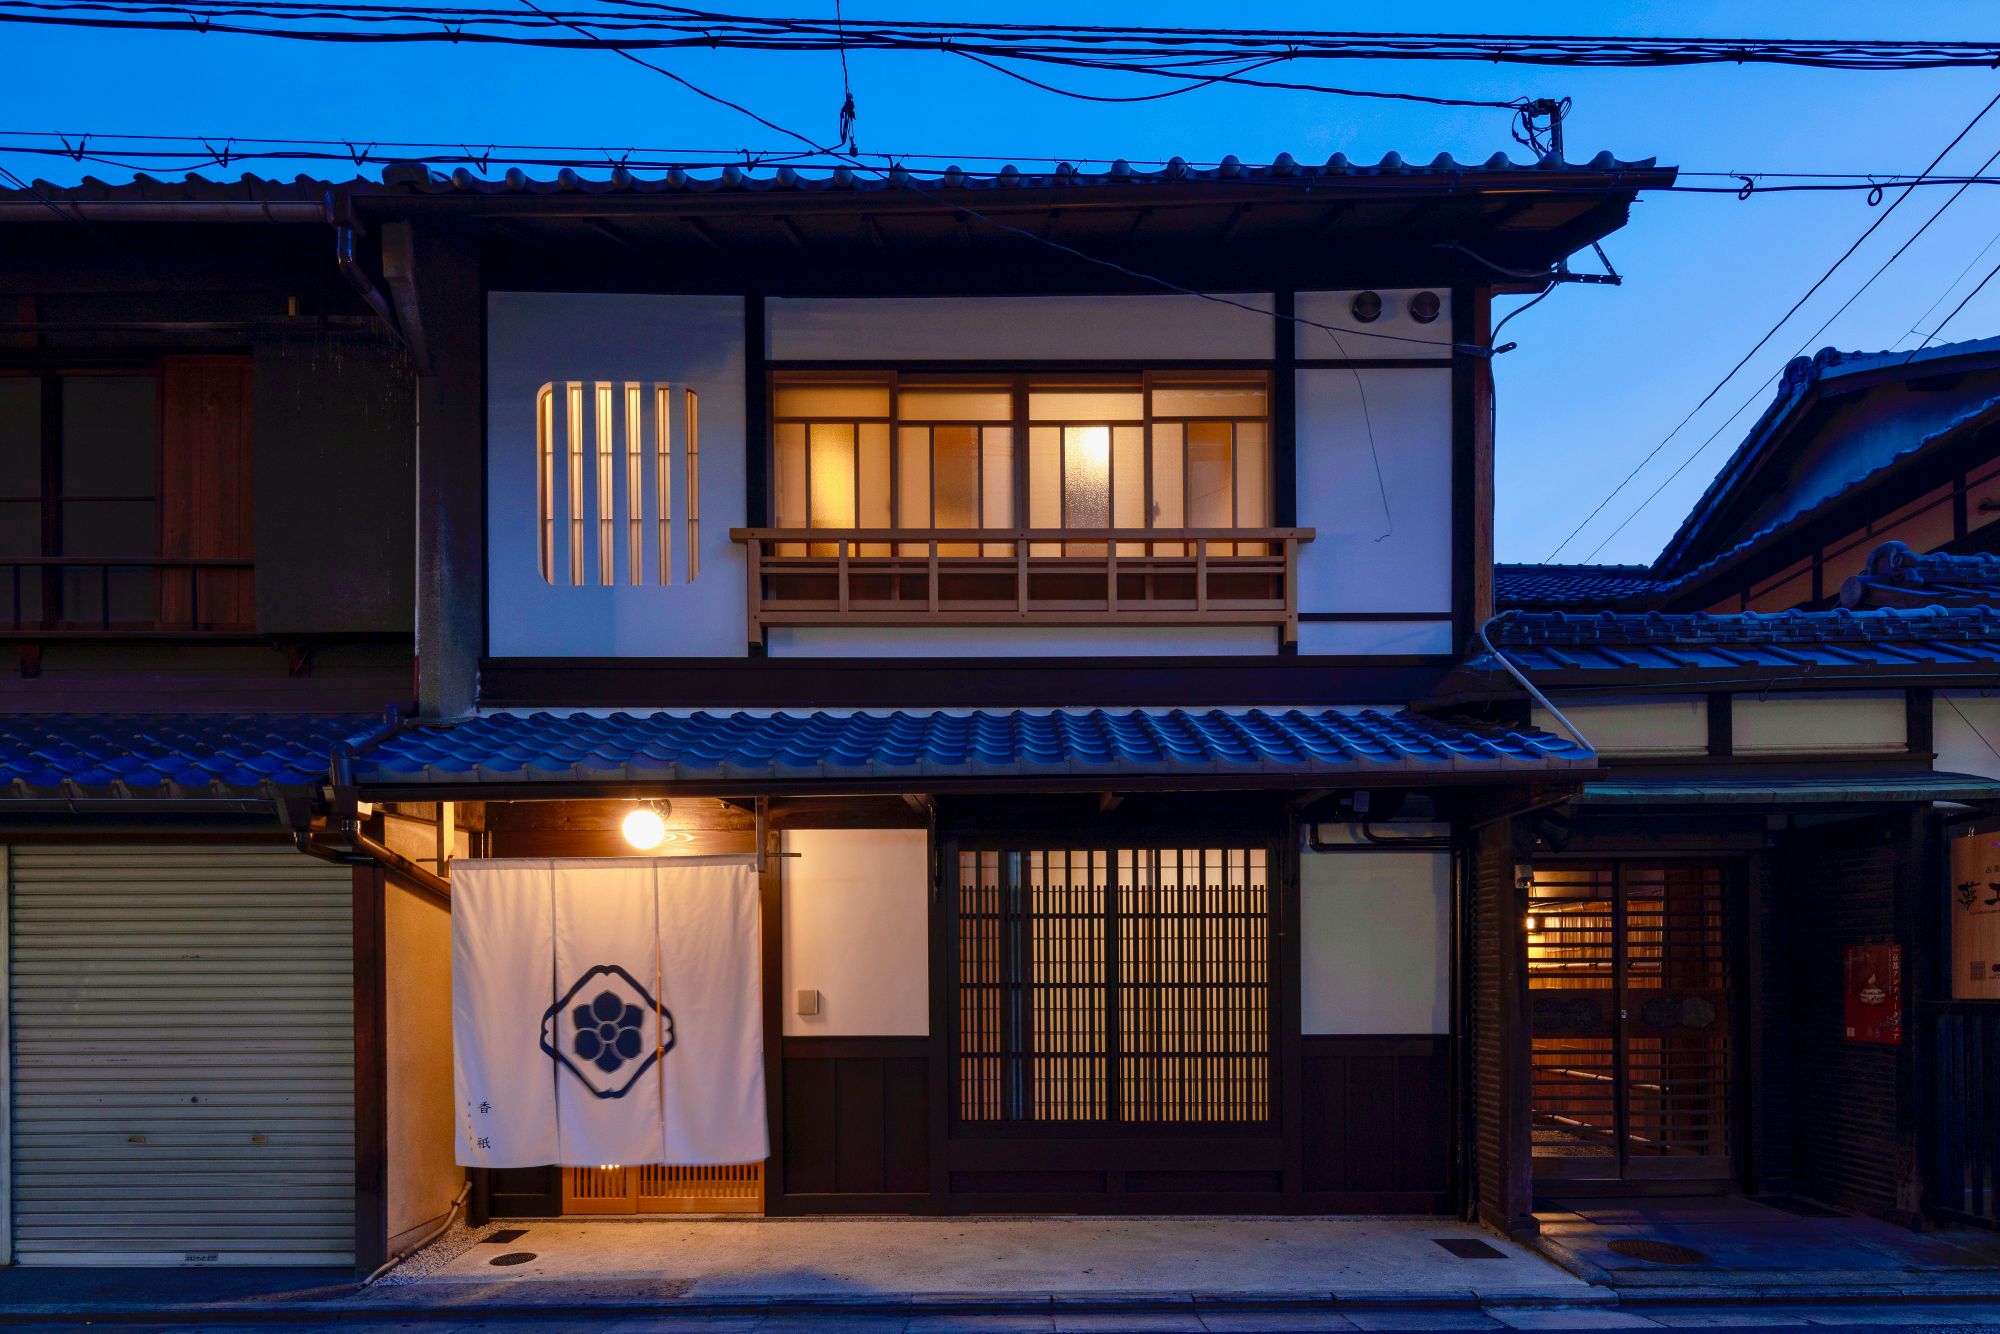 After the renovation of a Japanese machiya house